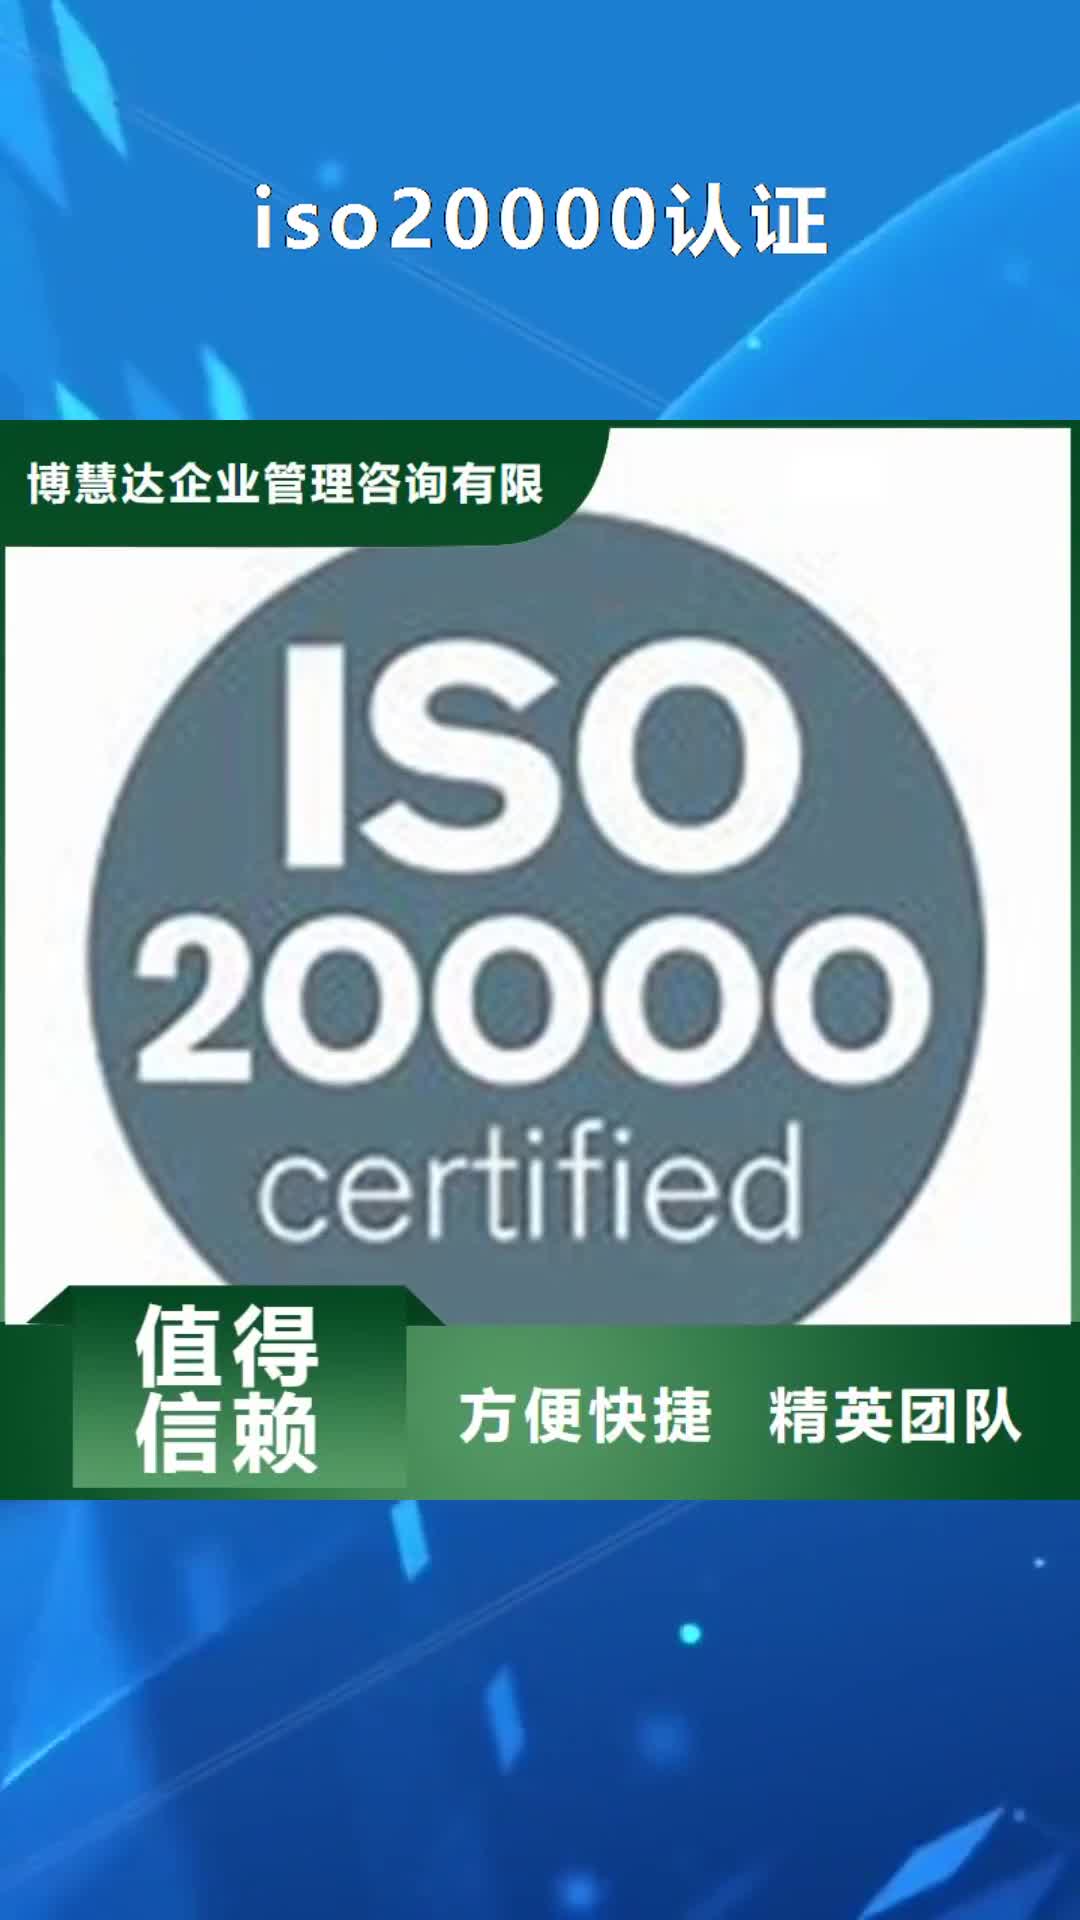 湖北【iso20000认证】 ISO14000\ESD防静电认证放心